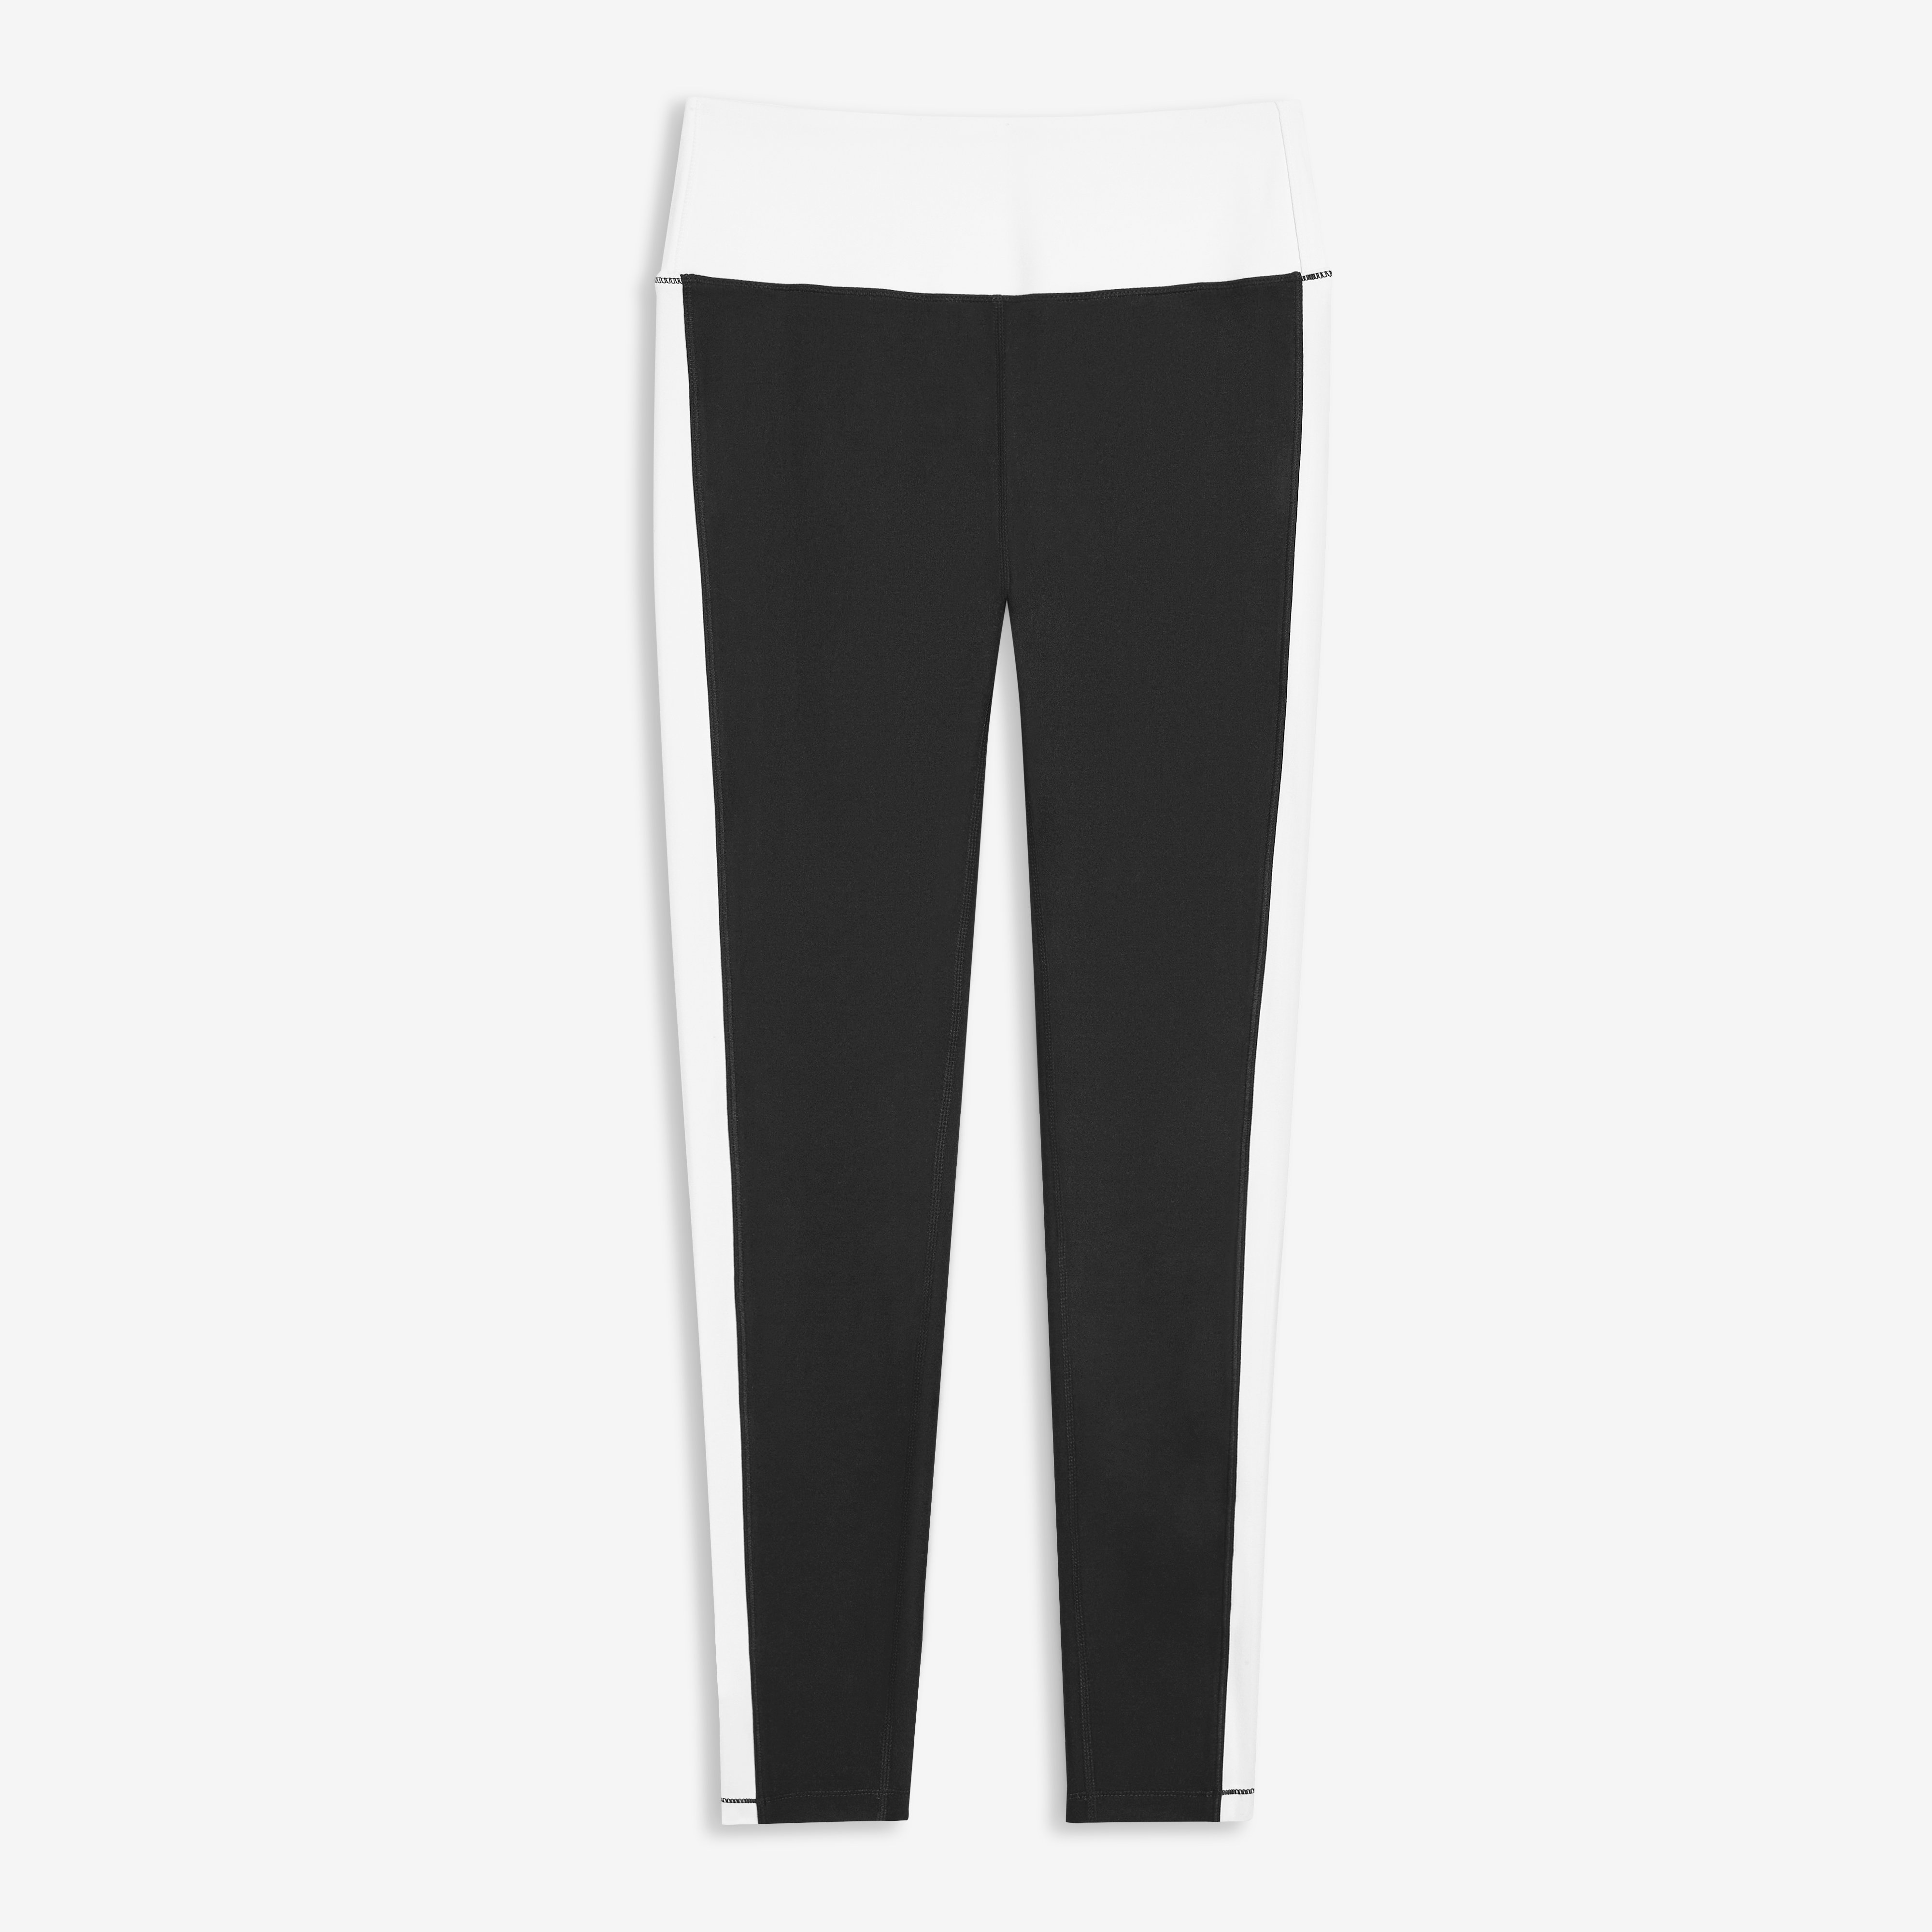 Black and white Joe Fresh leggings on white background